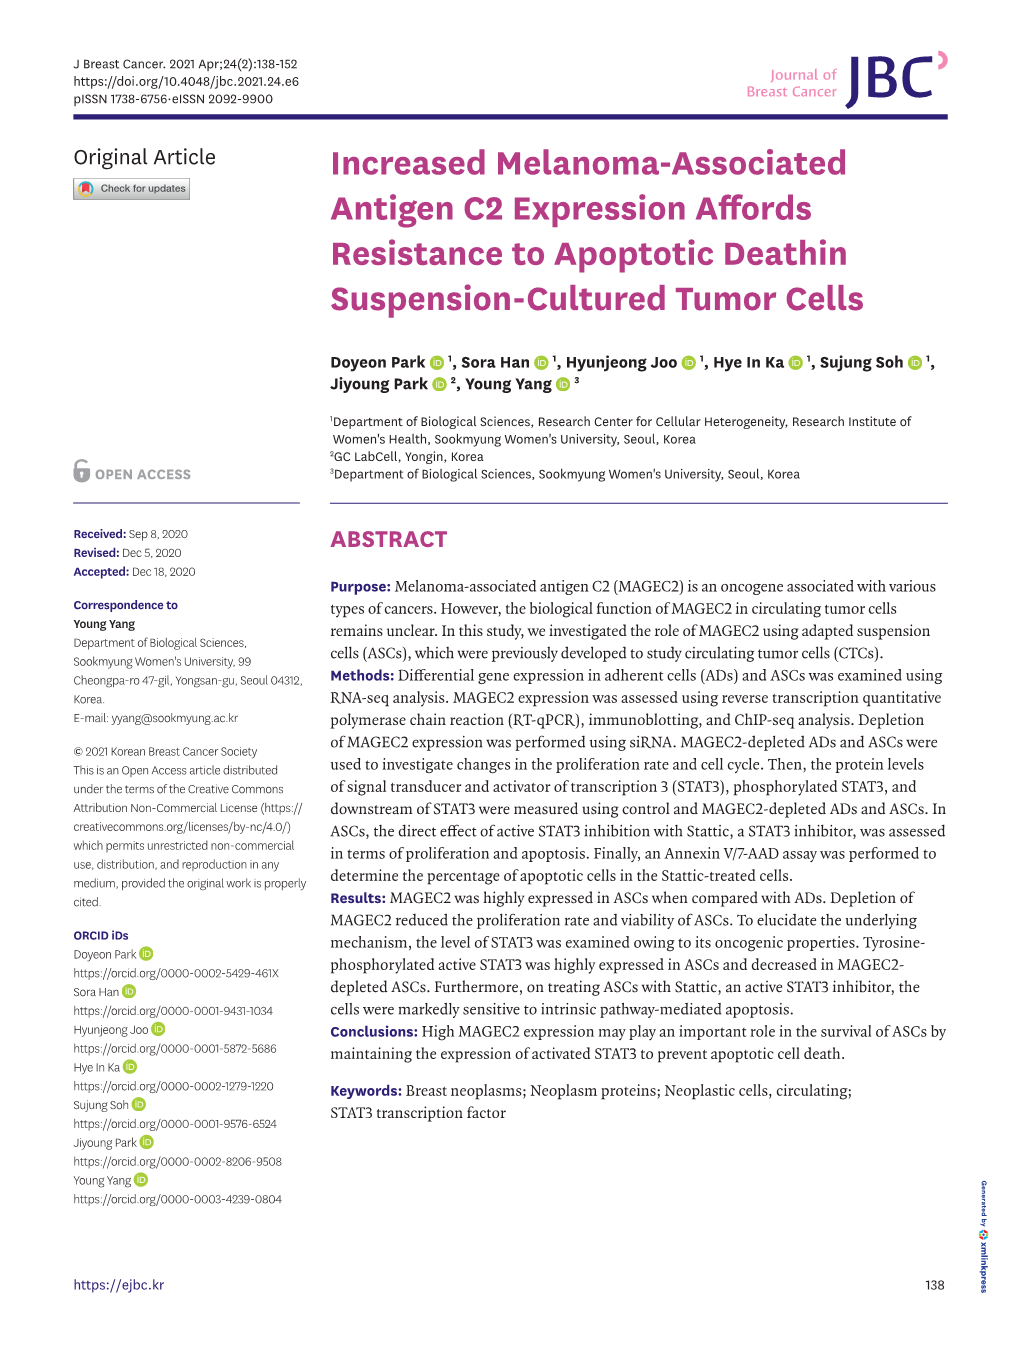 Increased Melanoma-Associated Antigen C2 Expression Affords Resistance to Apoptotic Deathin Suspension-Cultured Tumor Cells